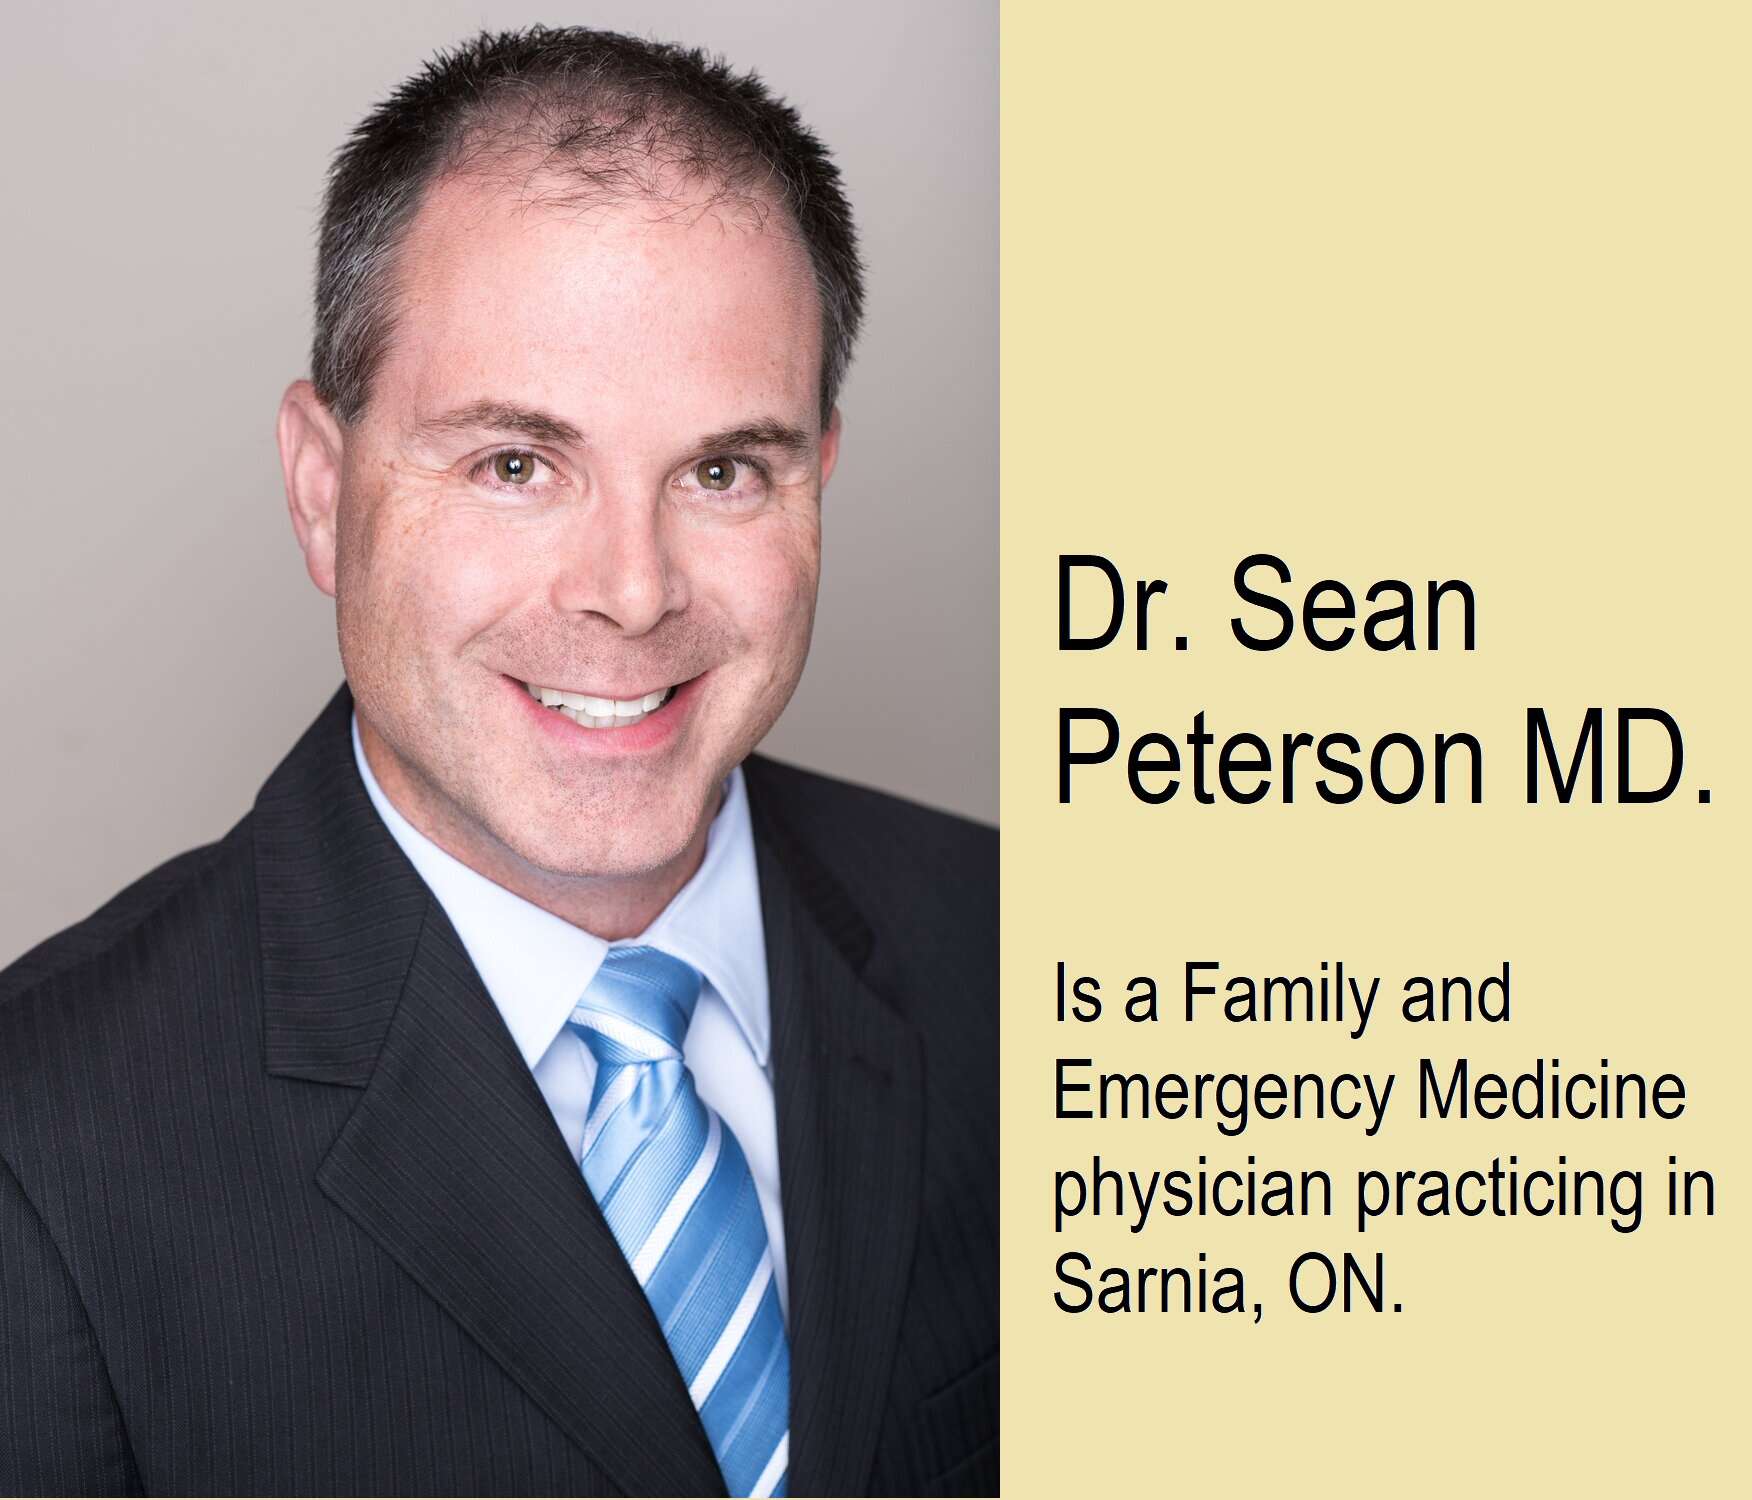 Dr. Sean Peterson